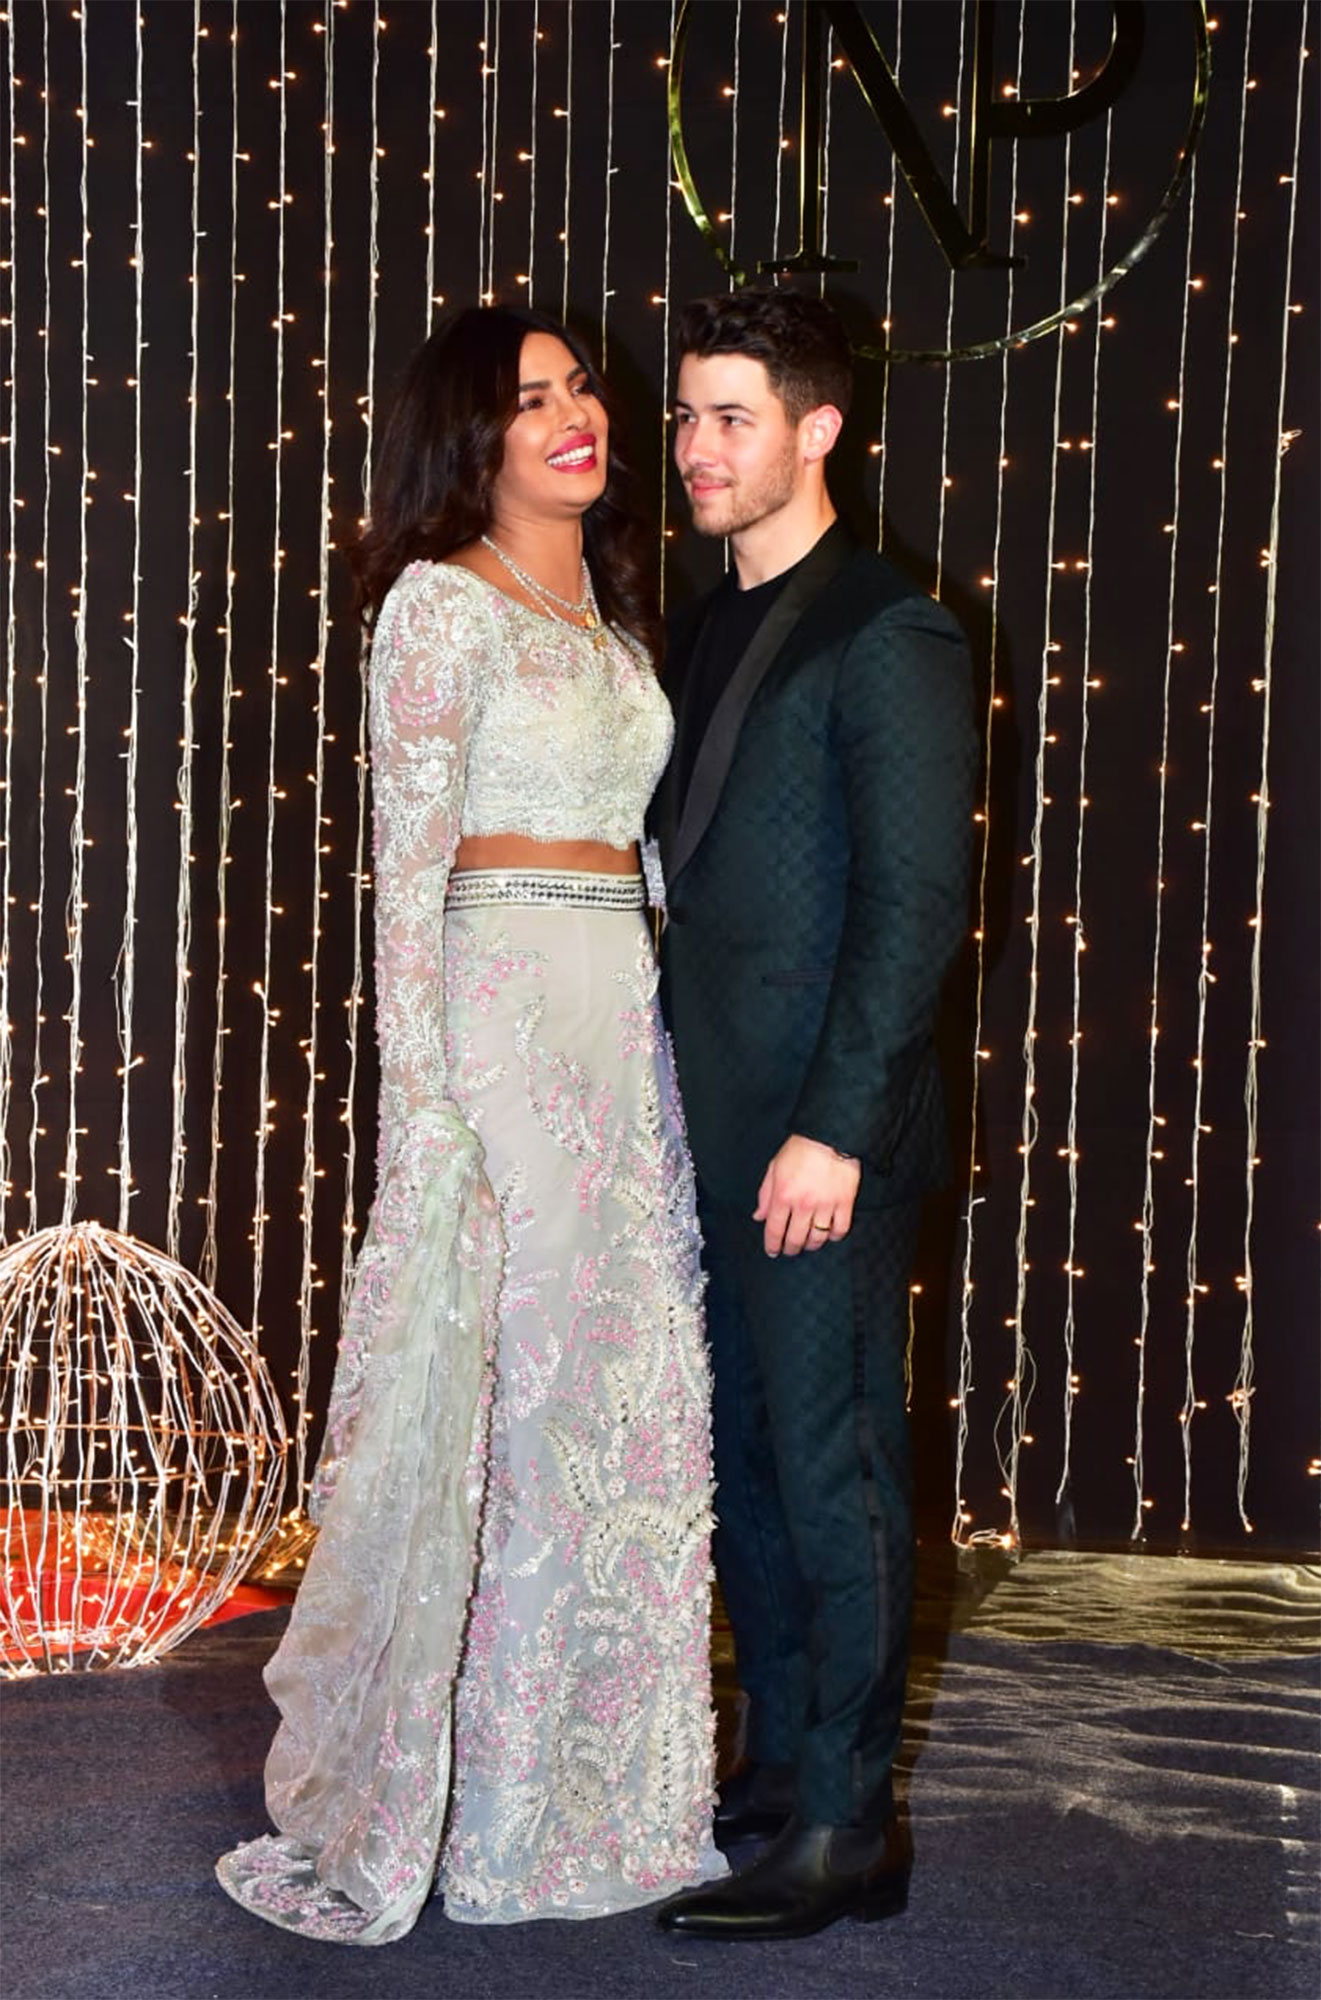 Nick Jonas and Priyanka Chopra Continue Their Wedding Celebration With Third Reception